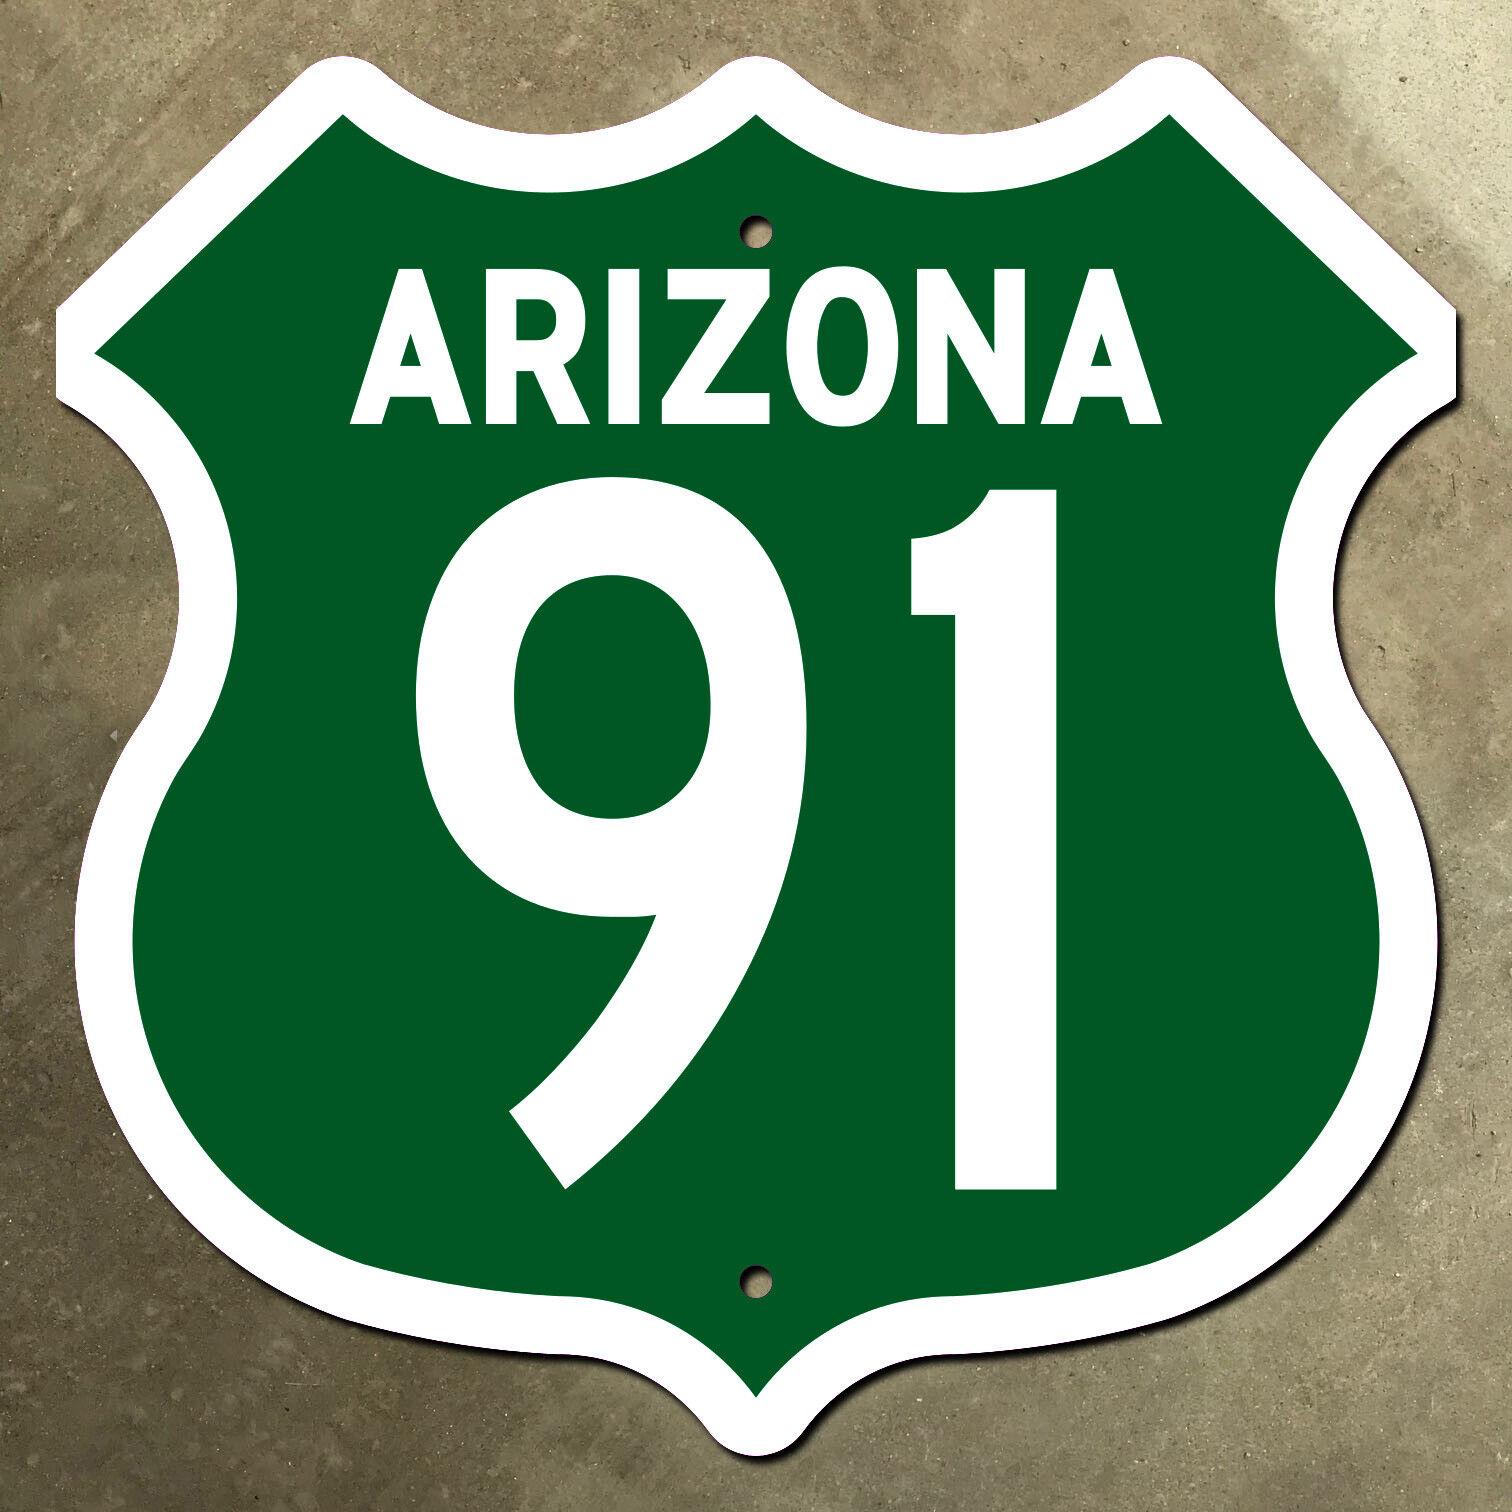 Arizona US route 91 Virgin River I-15 highway marker road sign green 1960 16x16